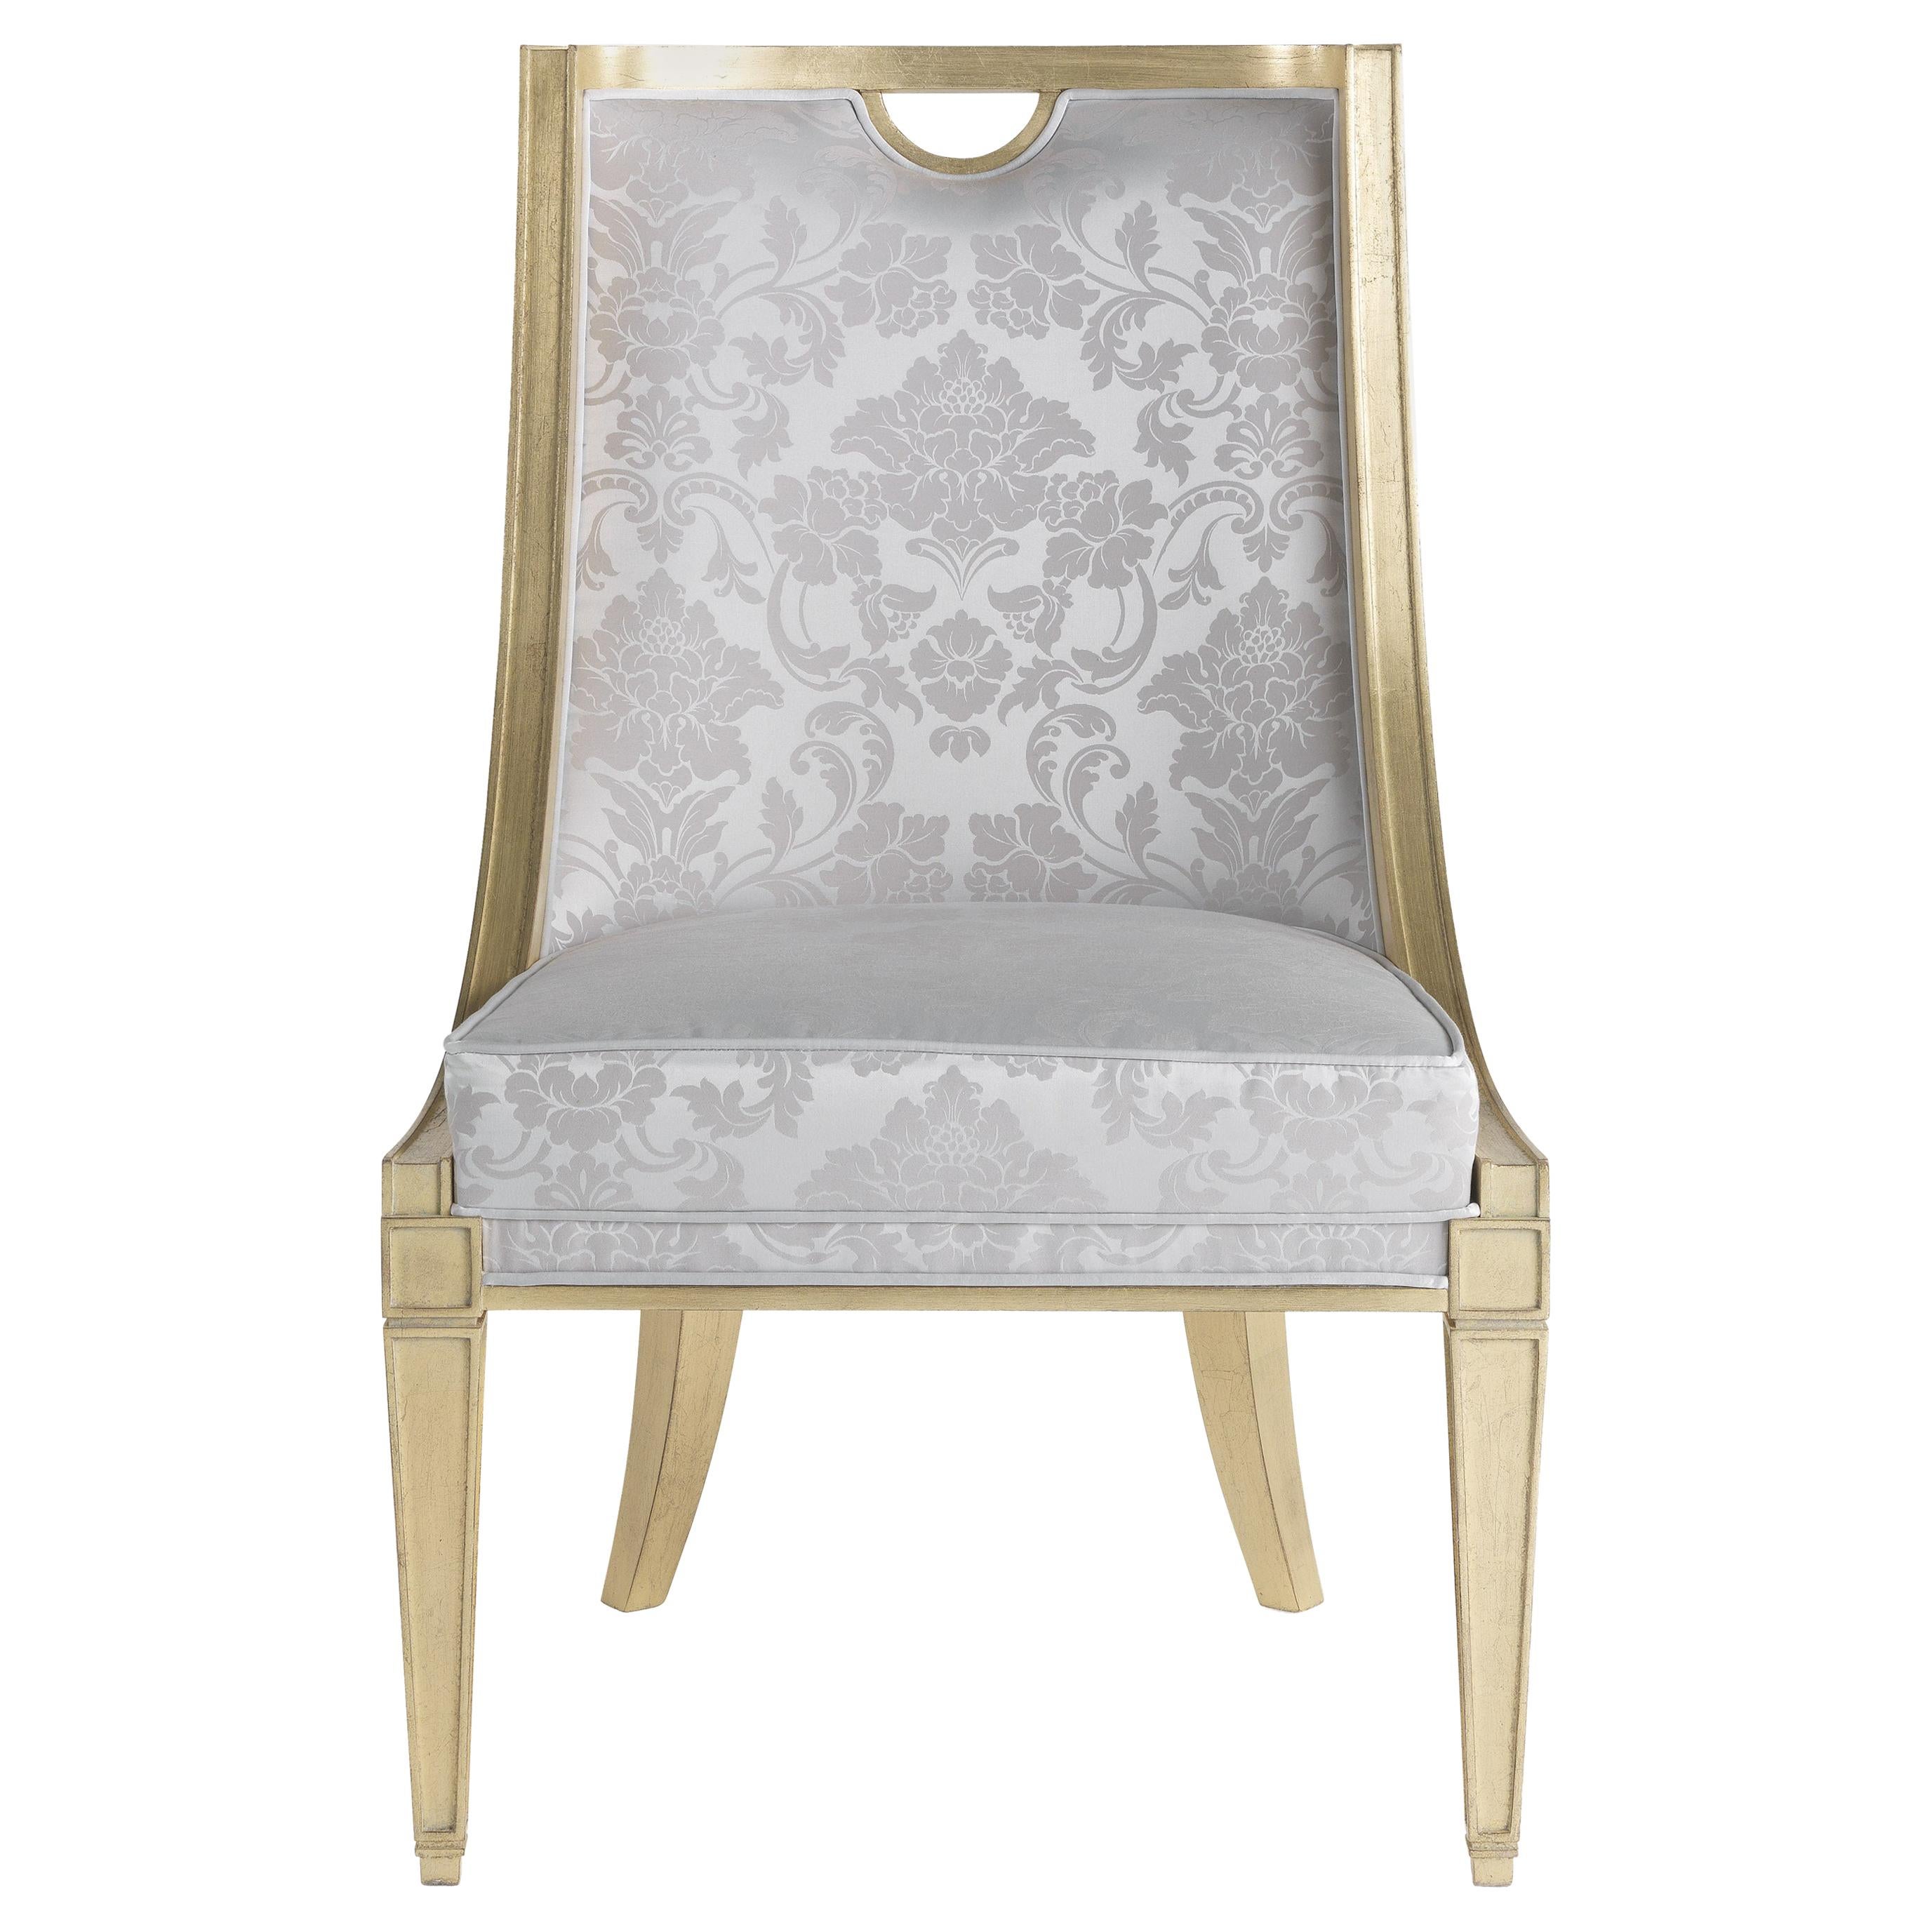 21st Century Fragonard Chair in Fabric